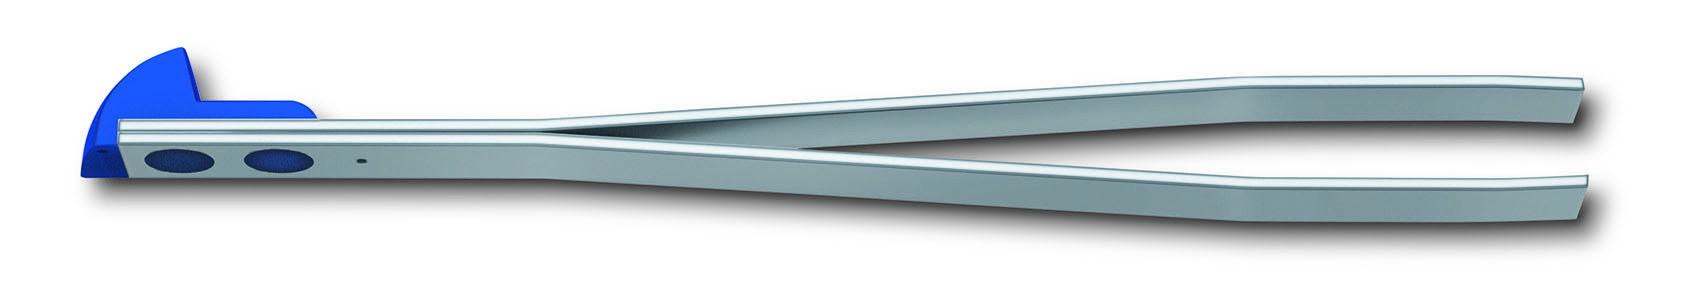 Пинцет для ножей Victorinox (A.6142.2.10) серебристый/синий